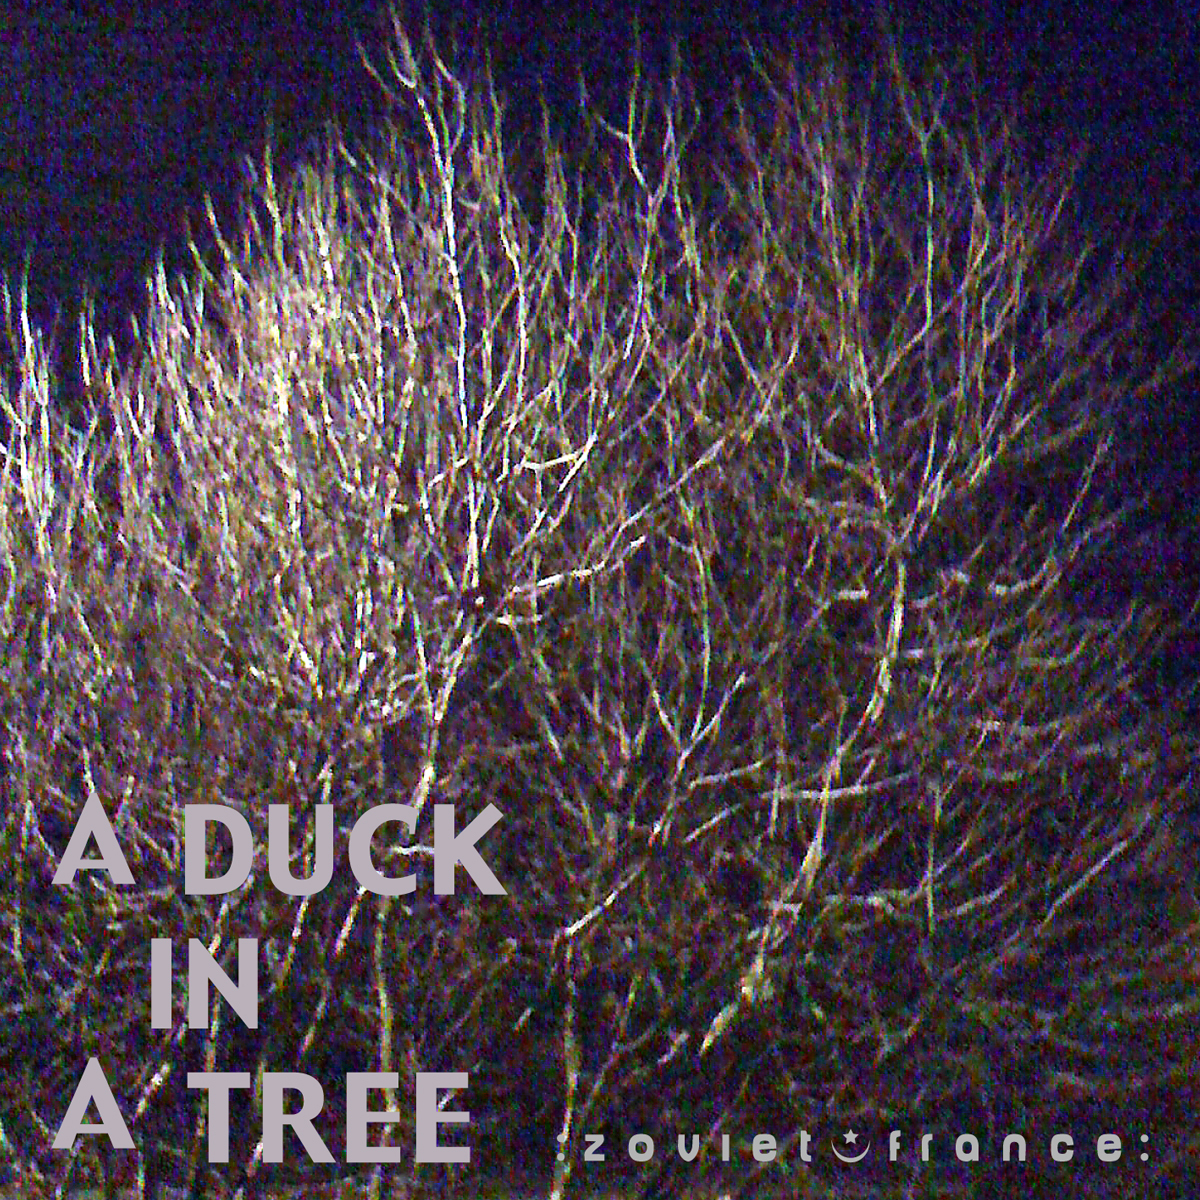 A-Duck-in-a-Tree-2013-01-05-_-Wait-Light-the-Falls-layout-1200.jpg